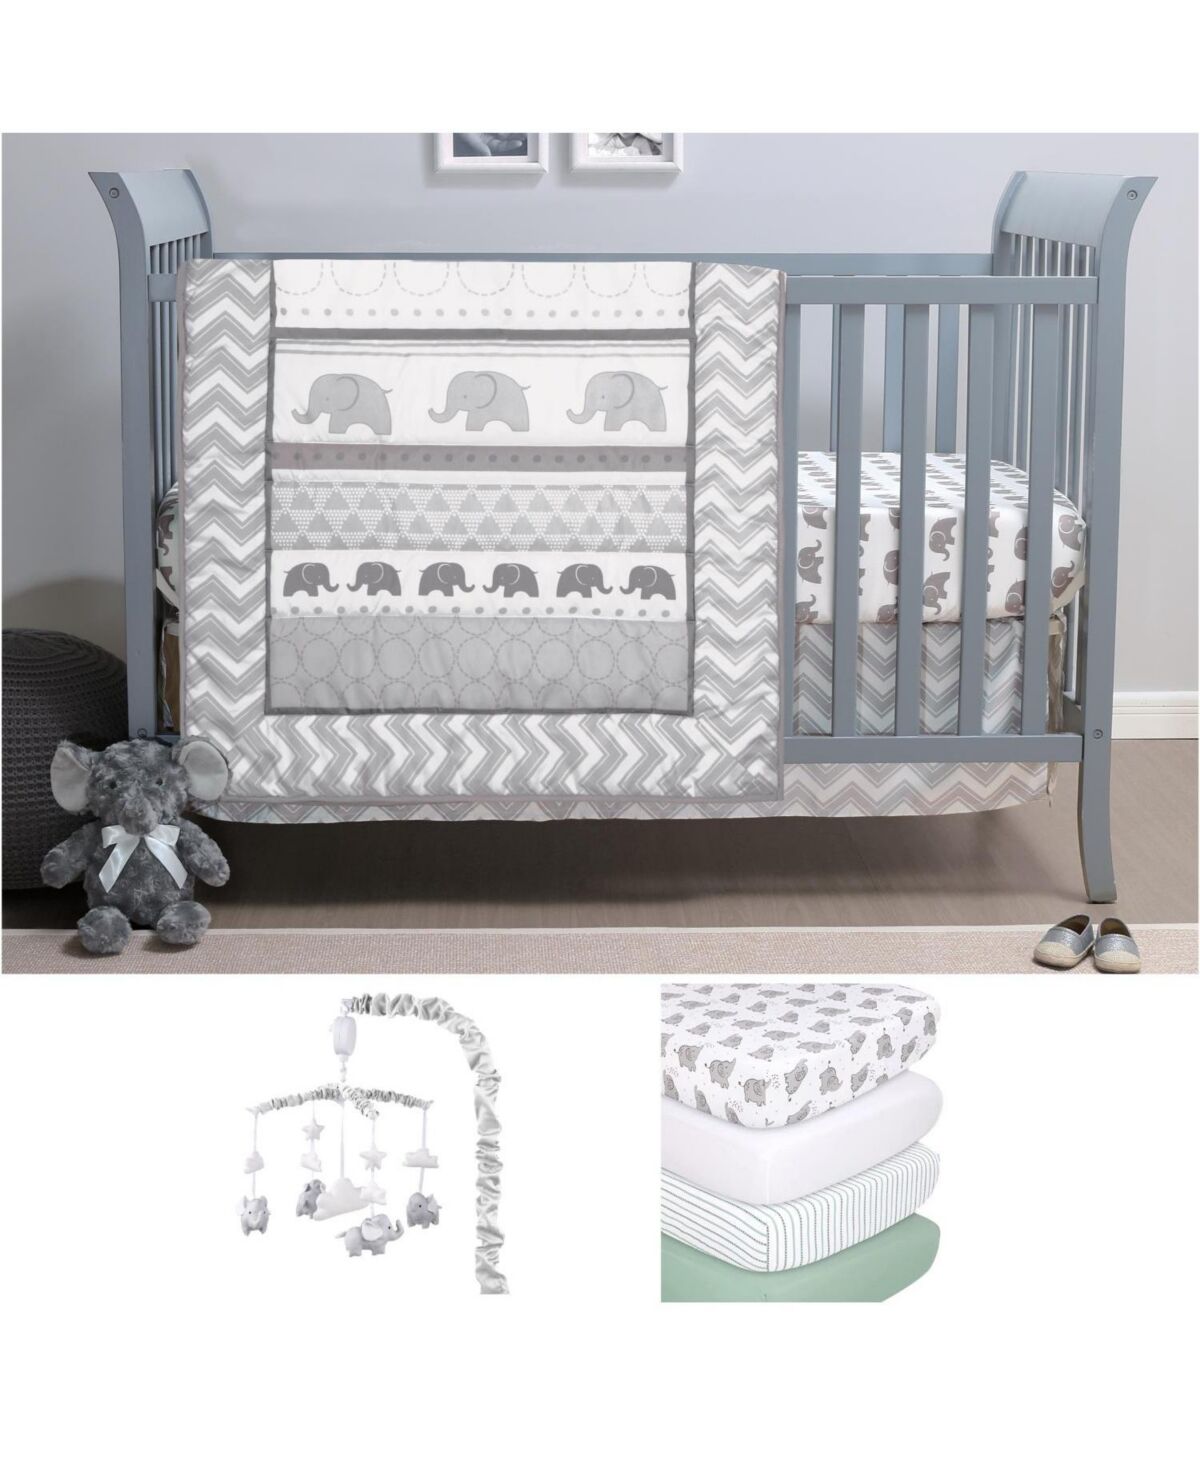 The Peanutshell Elephant Walk 8 Piece Baby Nursery Crib Bedding Set, Quilt, Crib Sheets, Crib Skirt, and Mobile - Grey/white